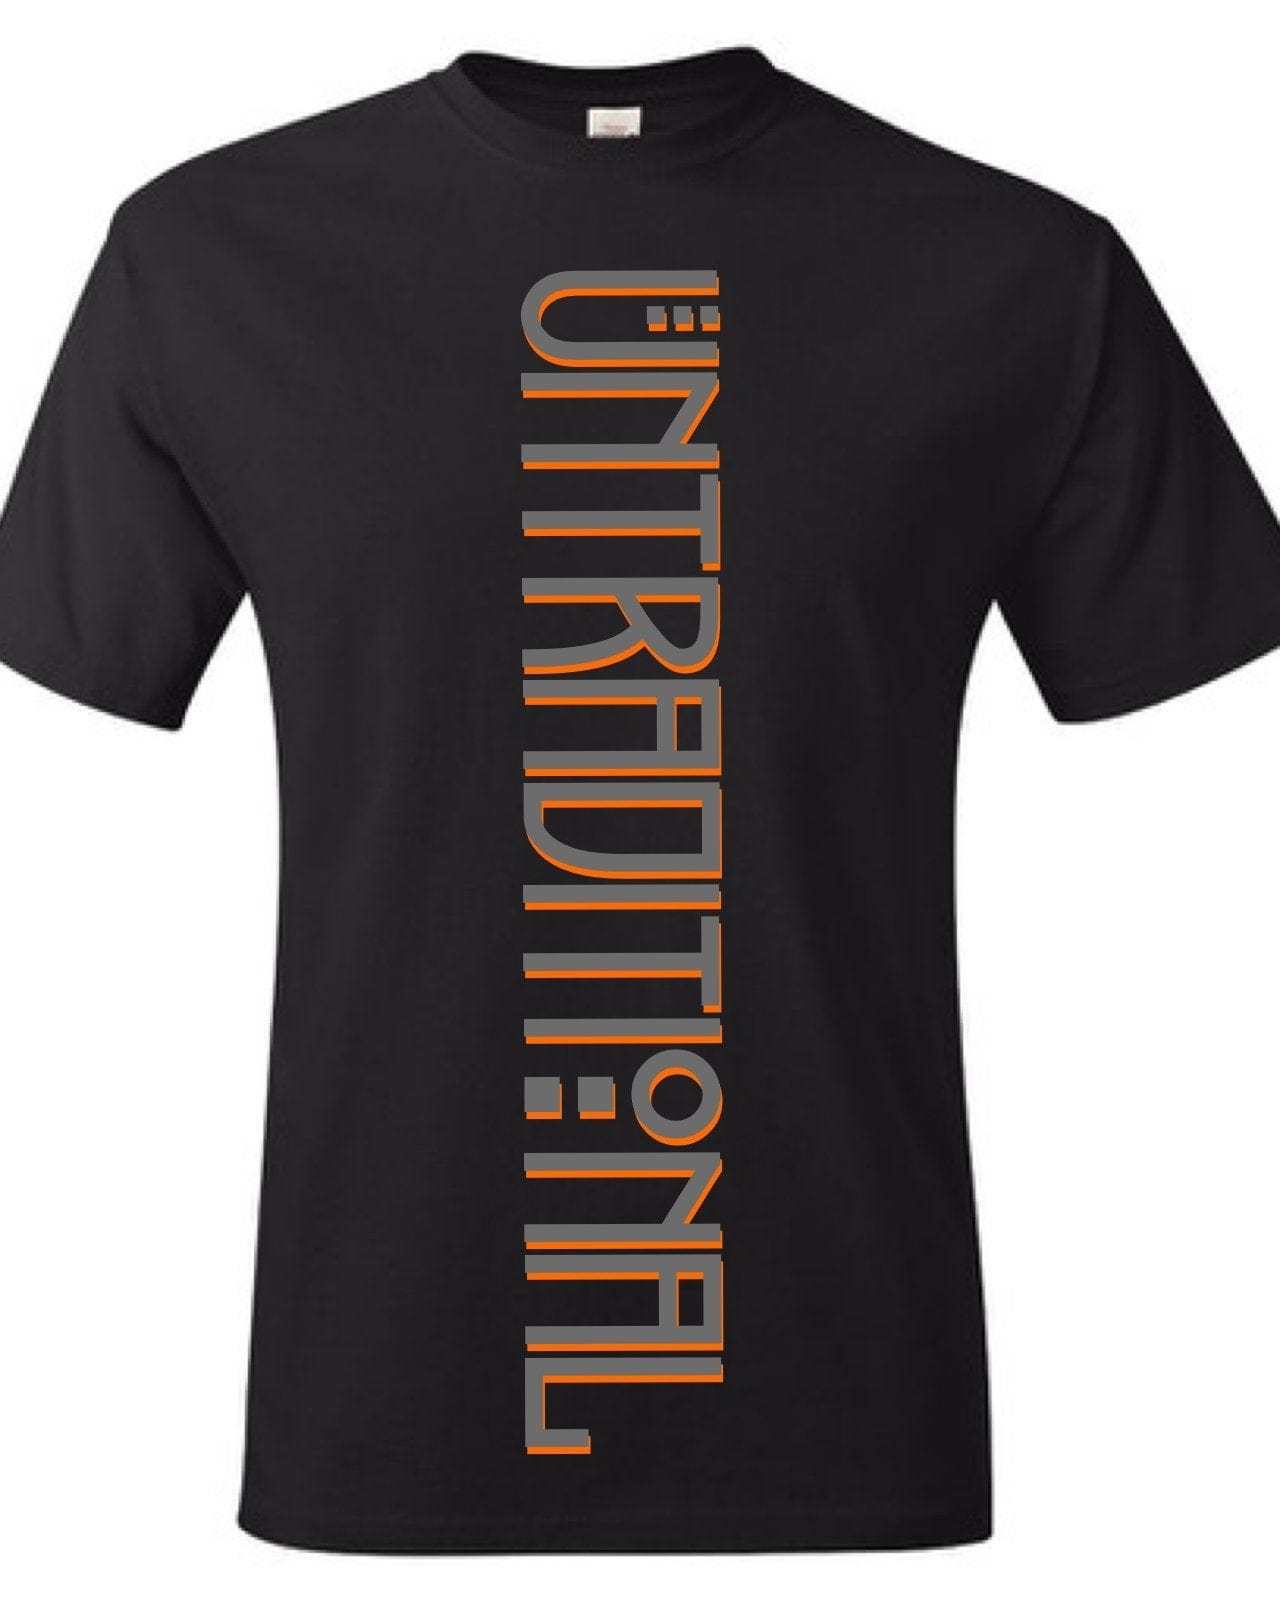 InsensitiviTees Shirts S / Black Untraditional